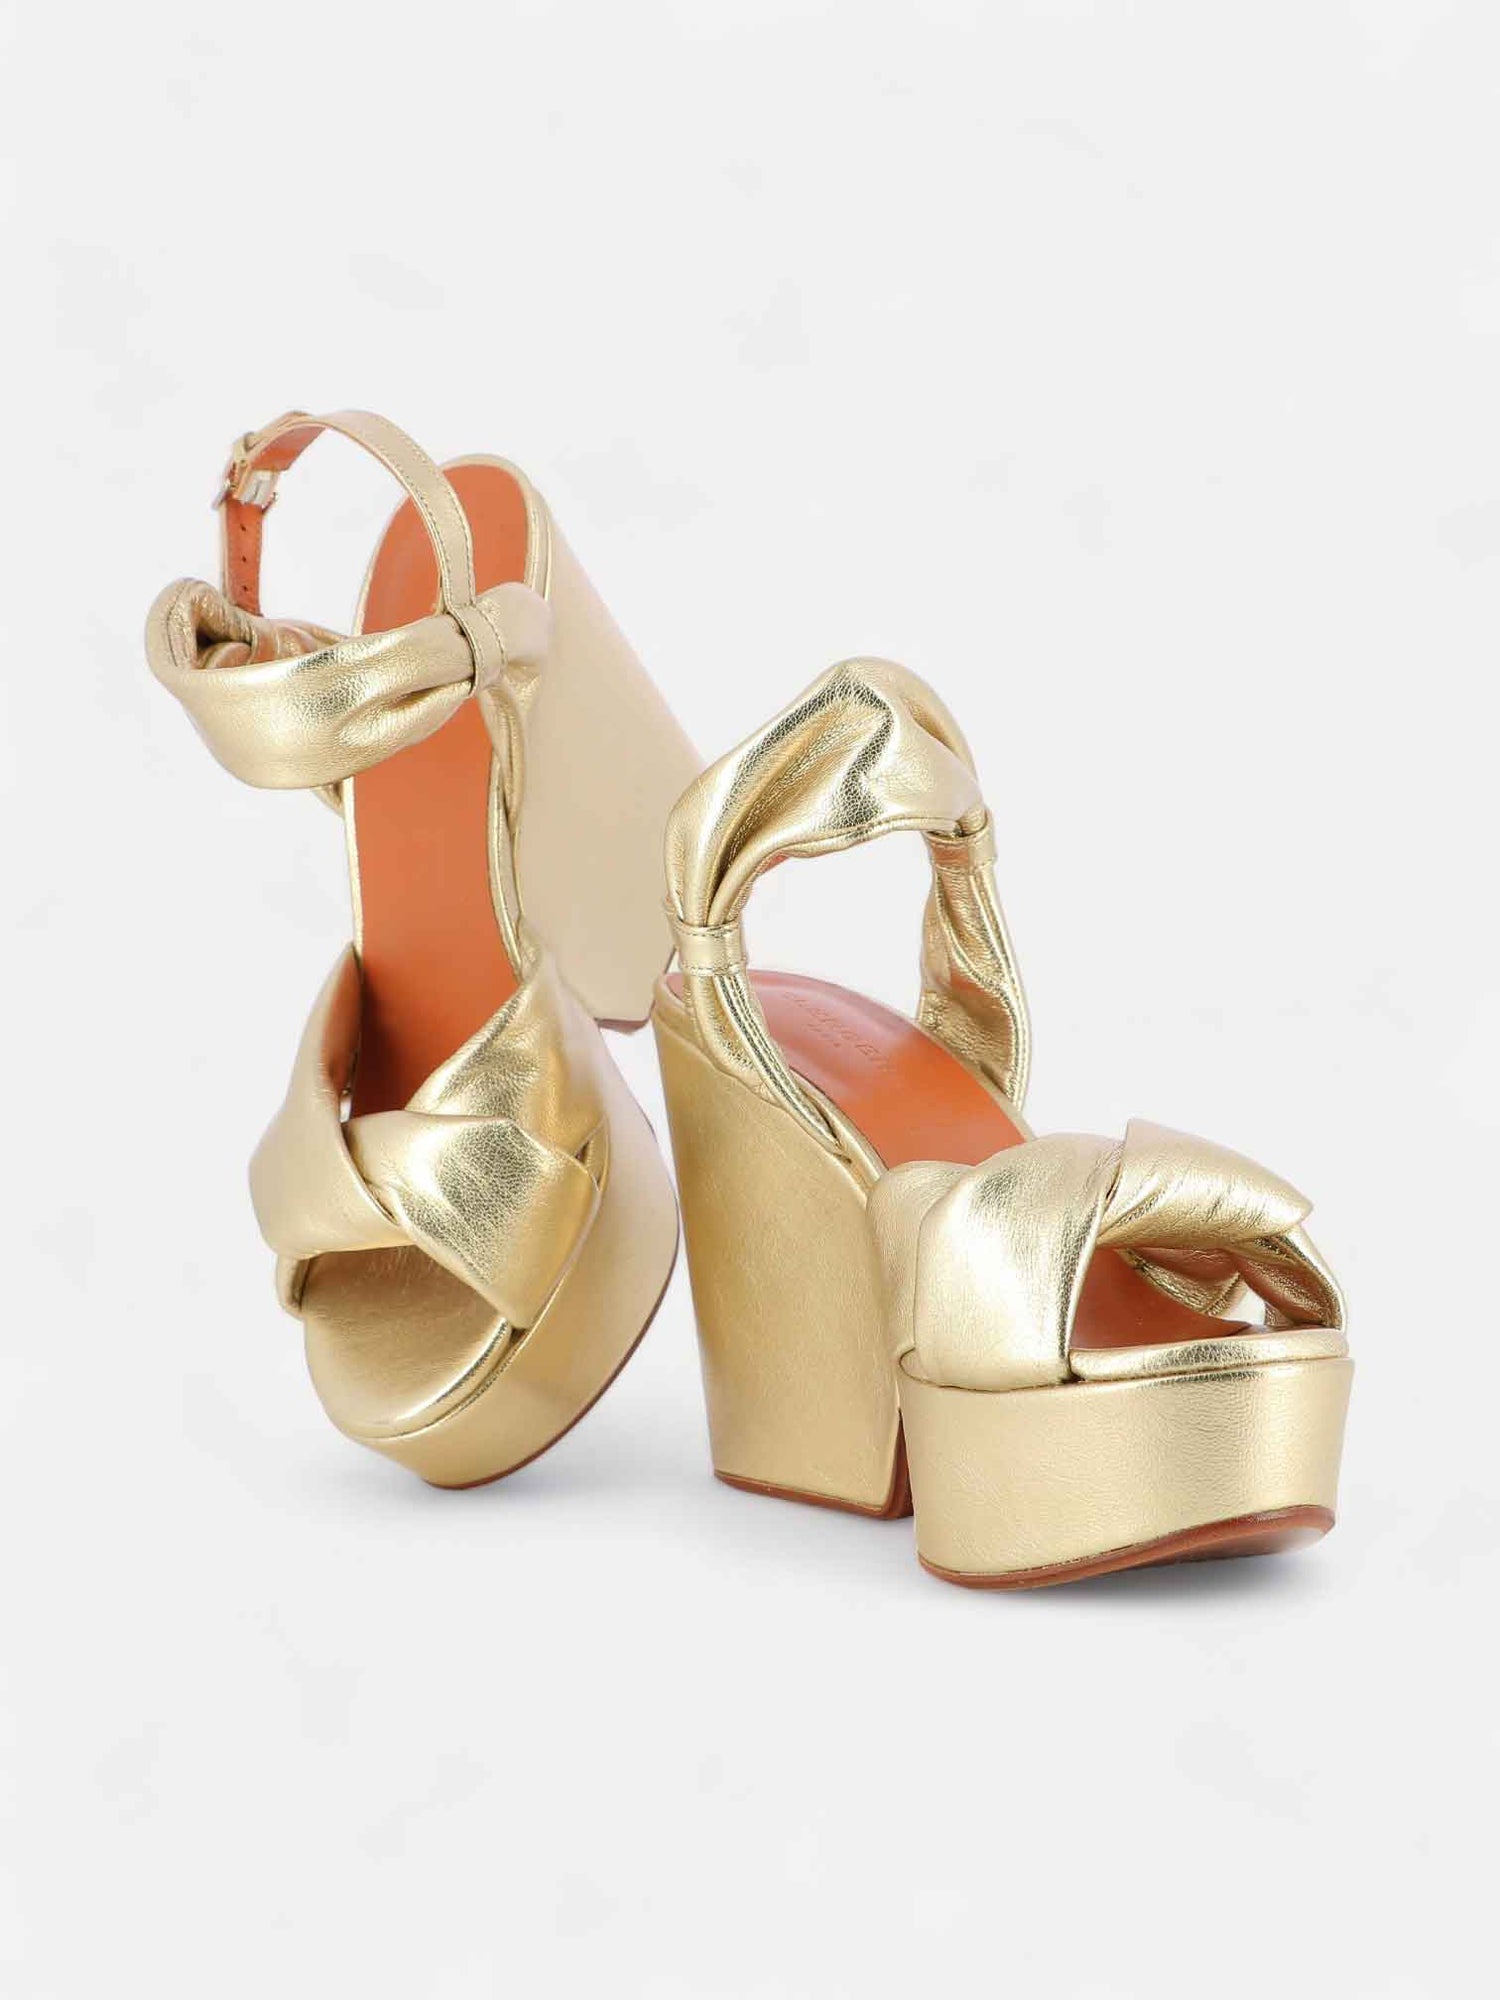 SANDALS - DARLIE sandals, lambskin gold metallic - 3606063896047 - Clergerie Paris - Europe